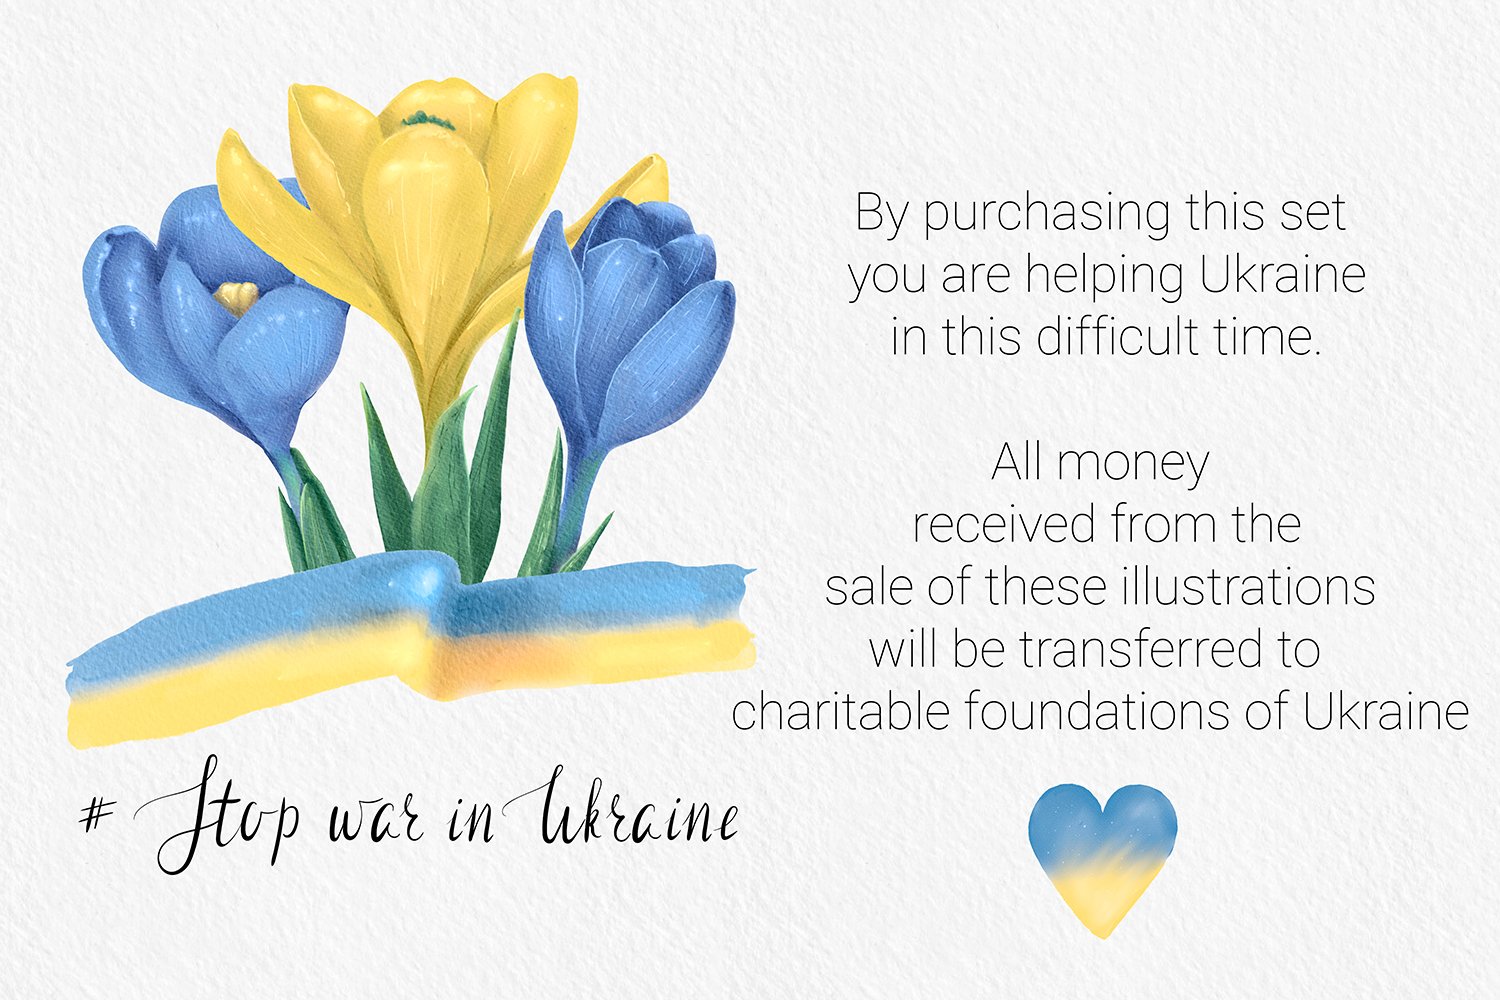 Ukrainian crocuses. Charity cover image.